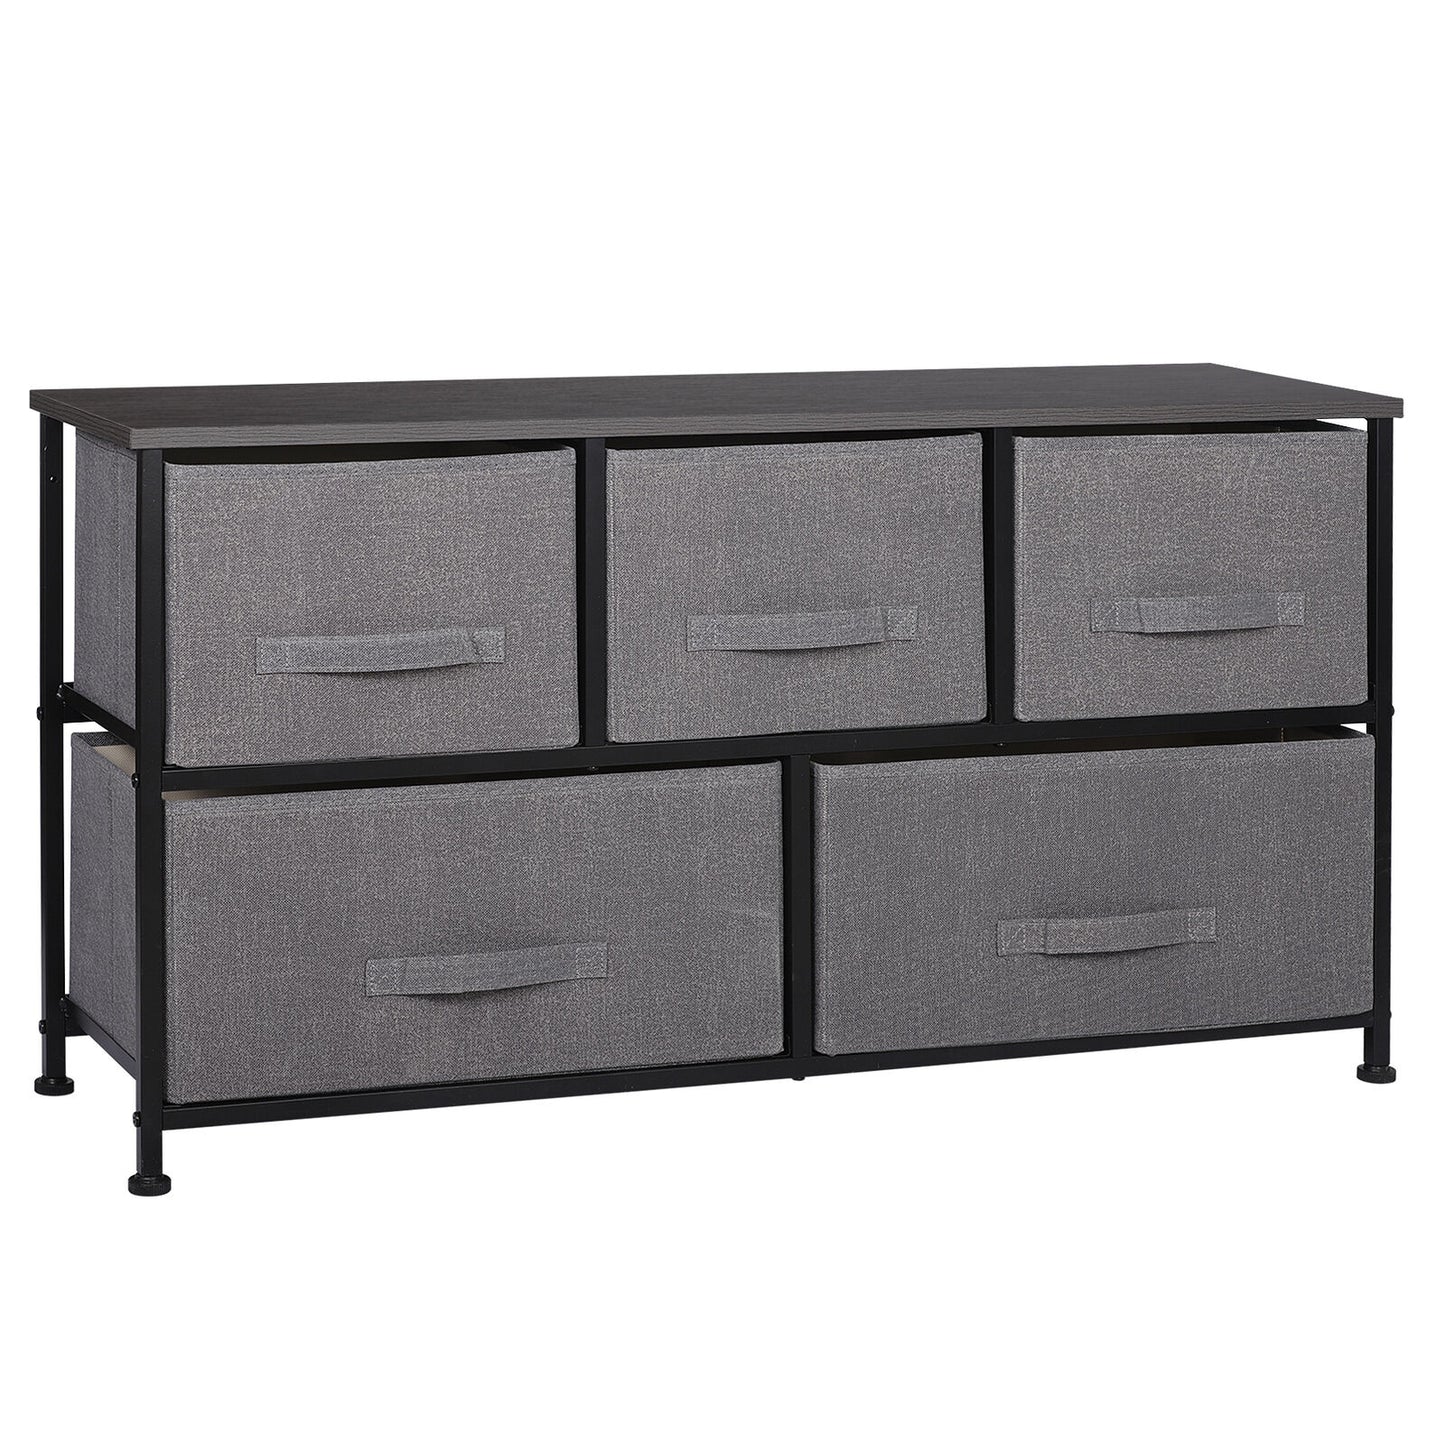 5 Drawers Extra Wide Dresser Storage Tower Chest Closets Bedroom Graphite Grey